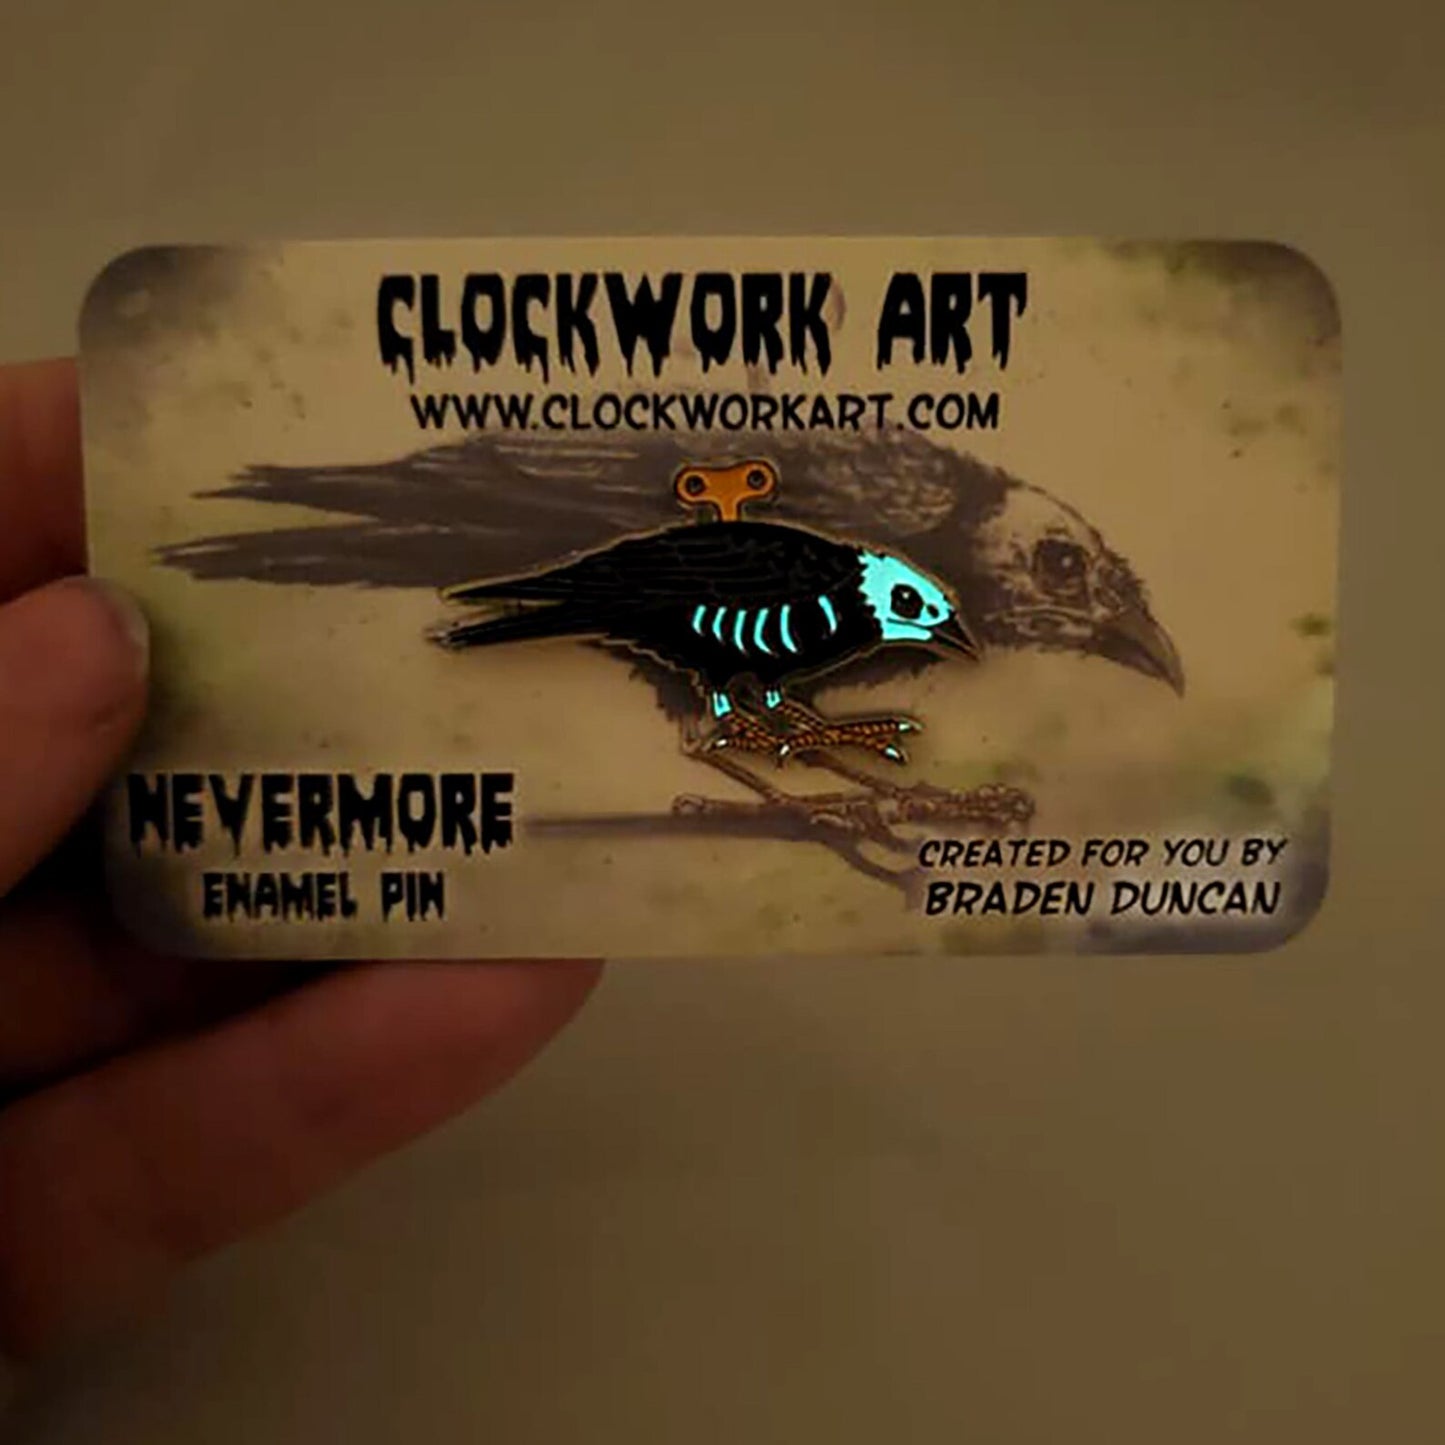 Clockwork Art "Nevermore" Glow in the Dark Enamel Pin